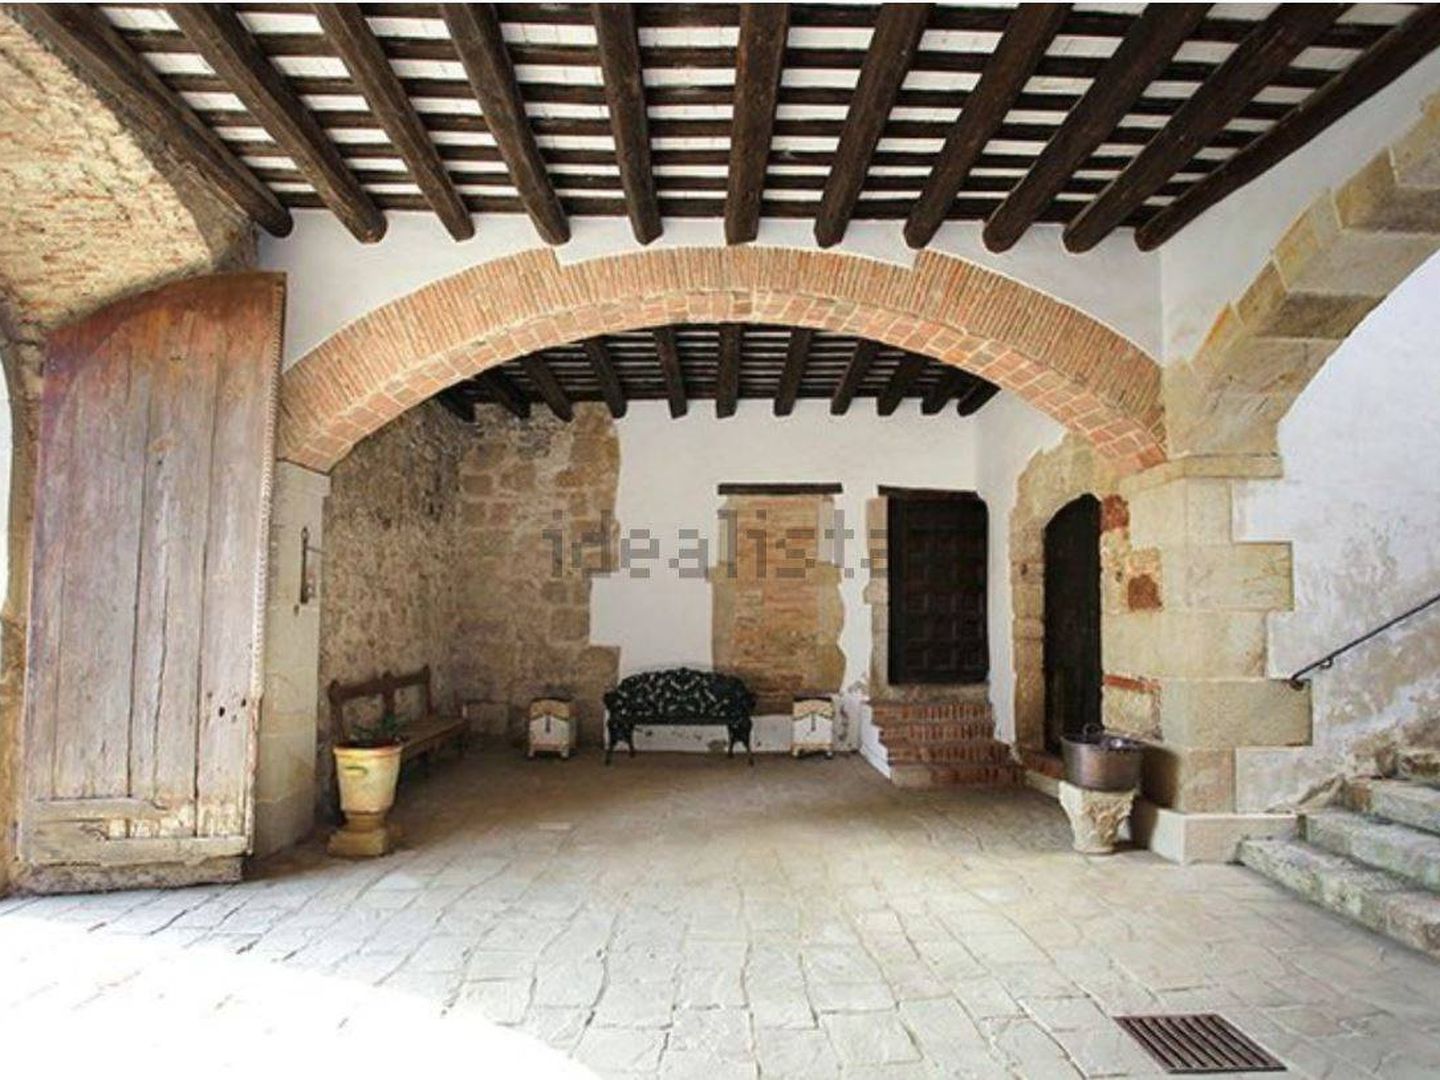 Interior de la casona de San Cugat.